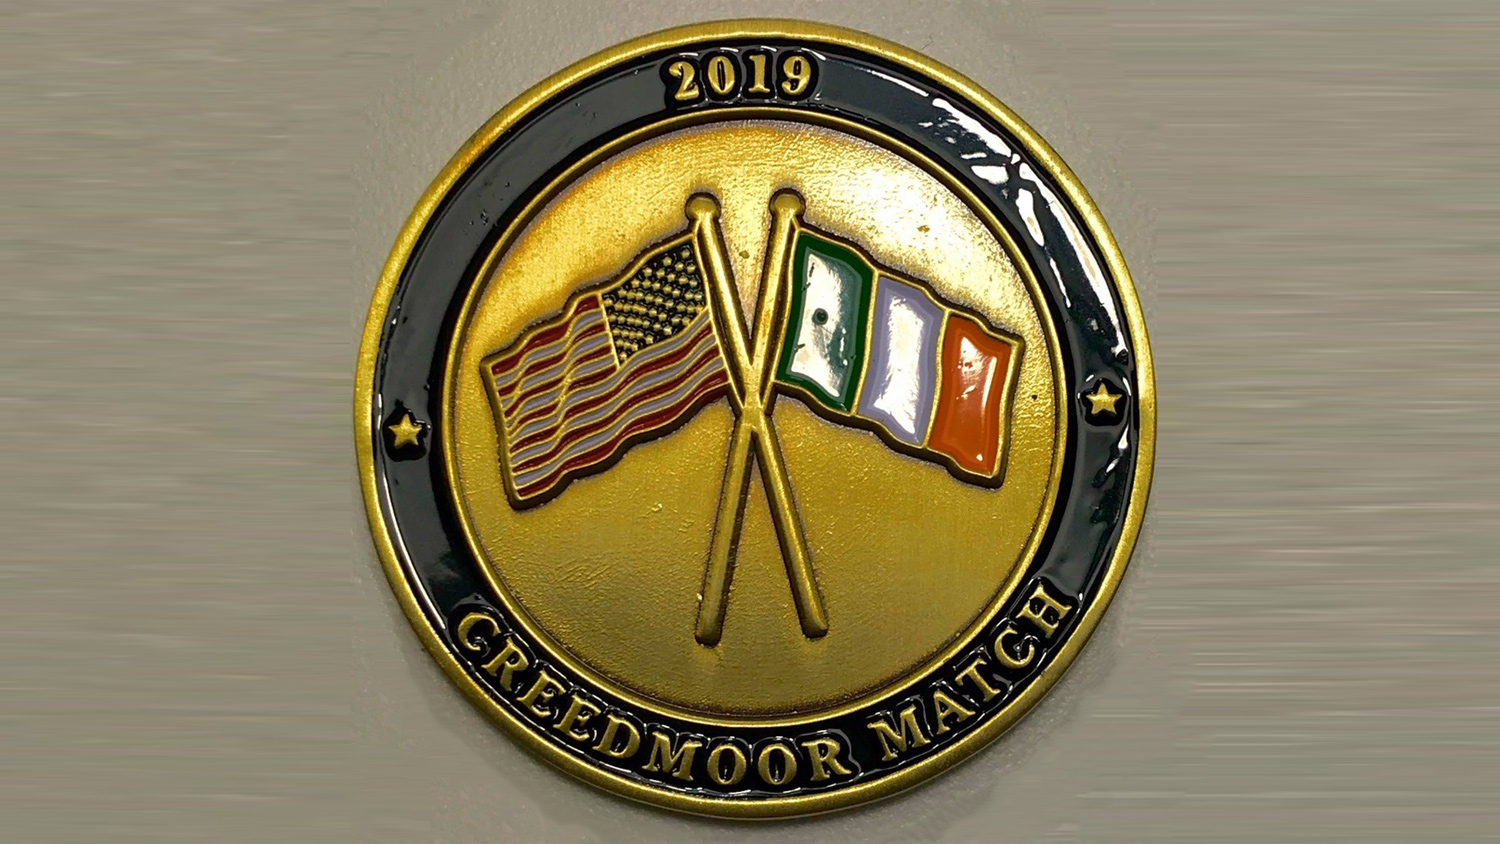 2019 Creedmoor cup match pin